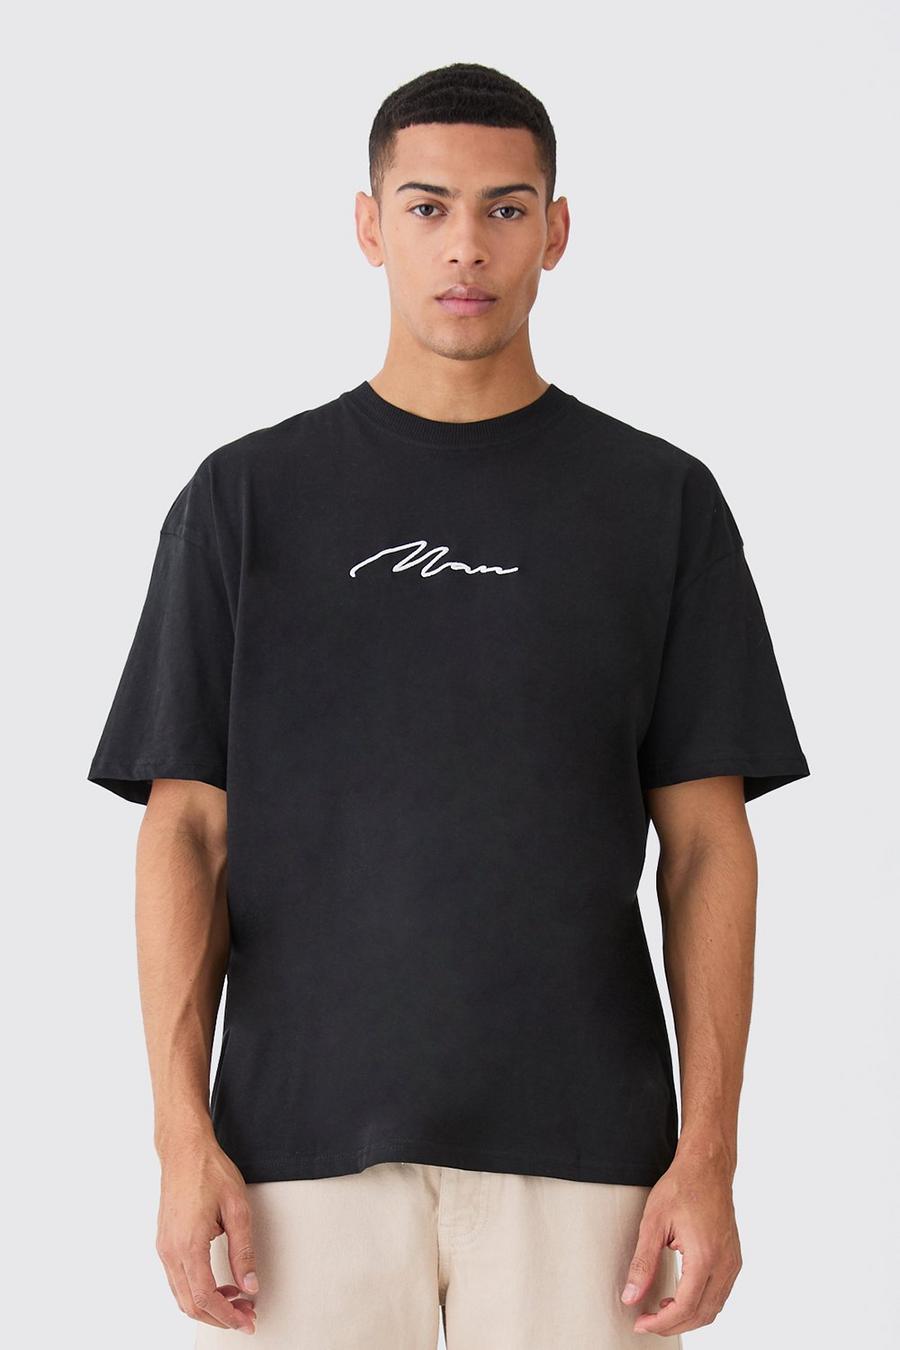 Pack de 2 camisetas oversize con firma MAN, Black negro